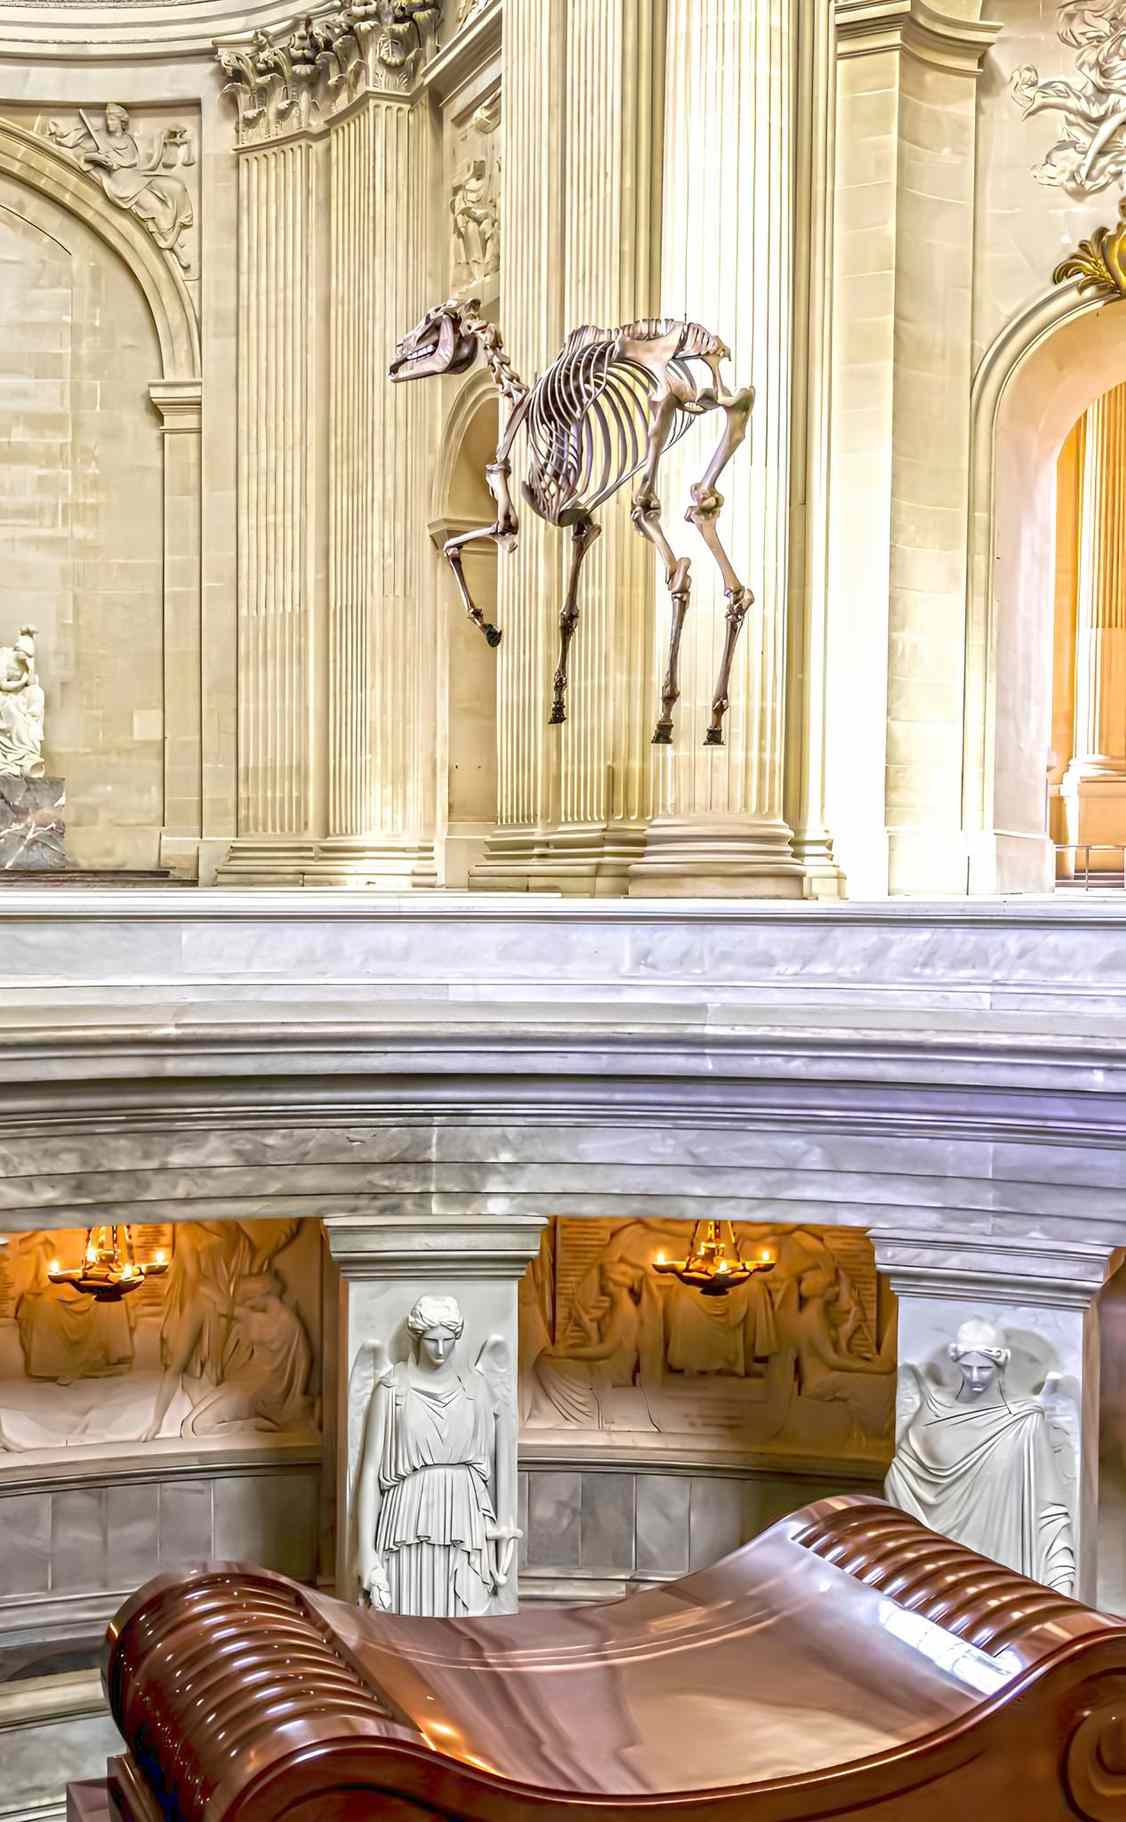 Dome Des Invalides'de Napolyon'un mezarının üzerinde asılı duran Memento Marengo. (Resim: Anne-Sylvane Marre-Noël)